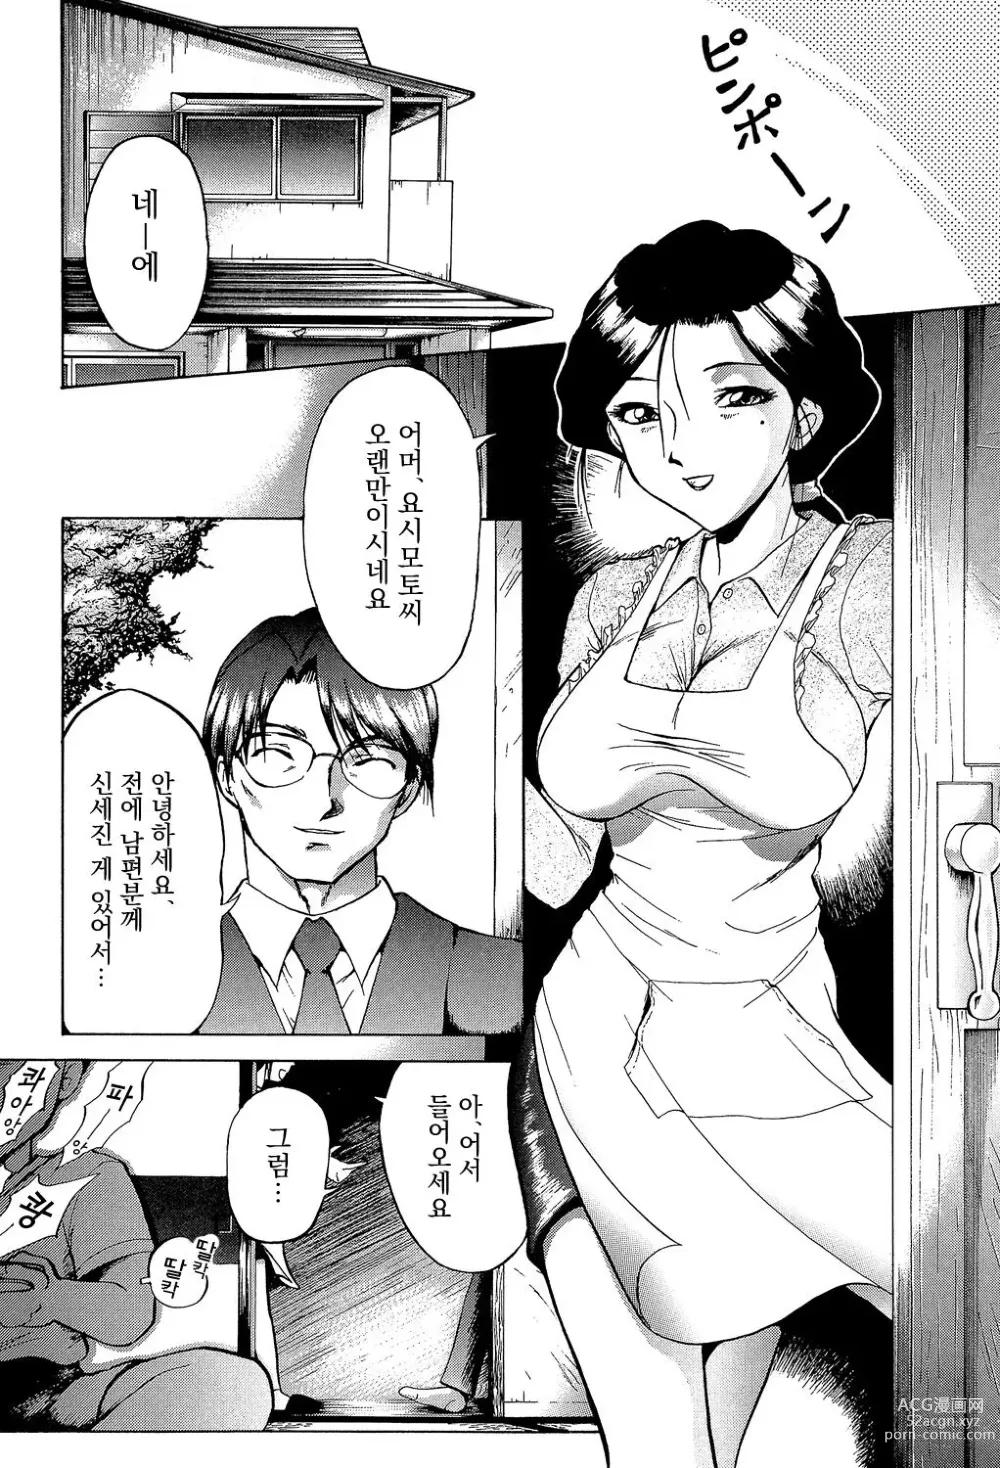 Page 2 of manga Inyou Reibo